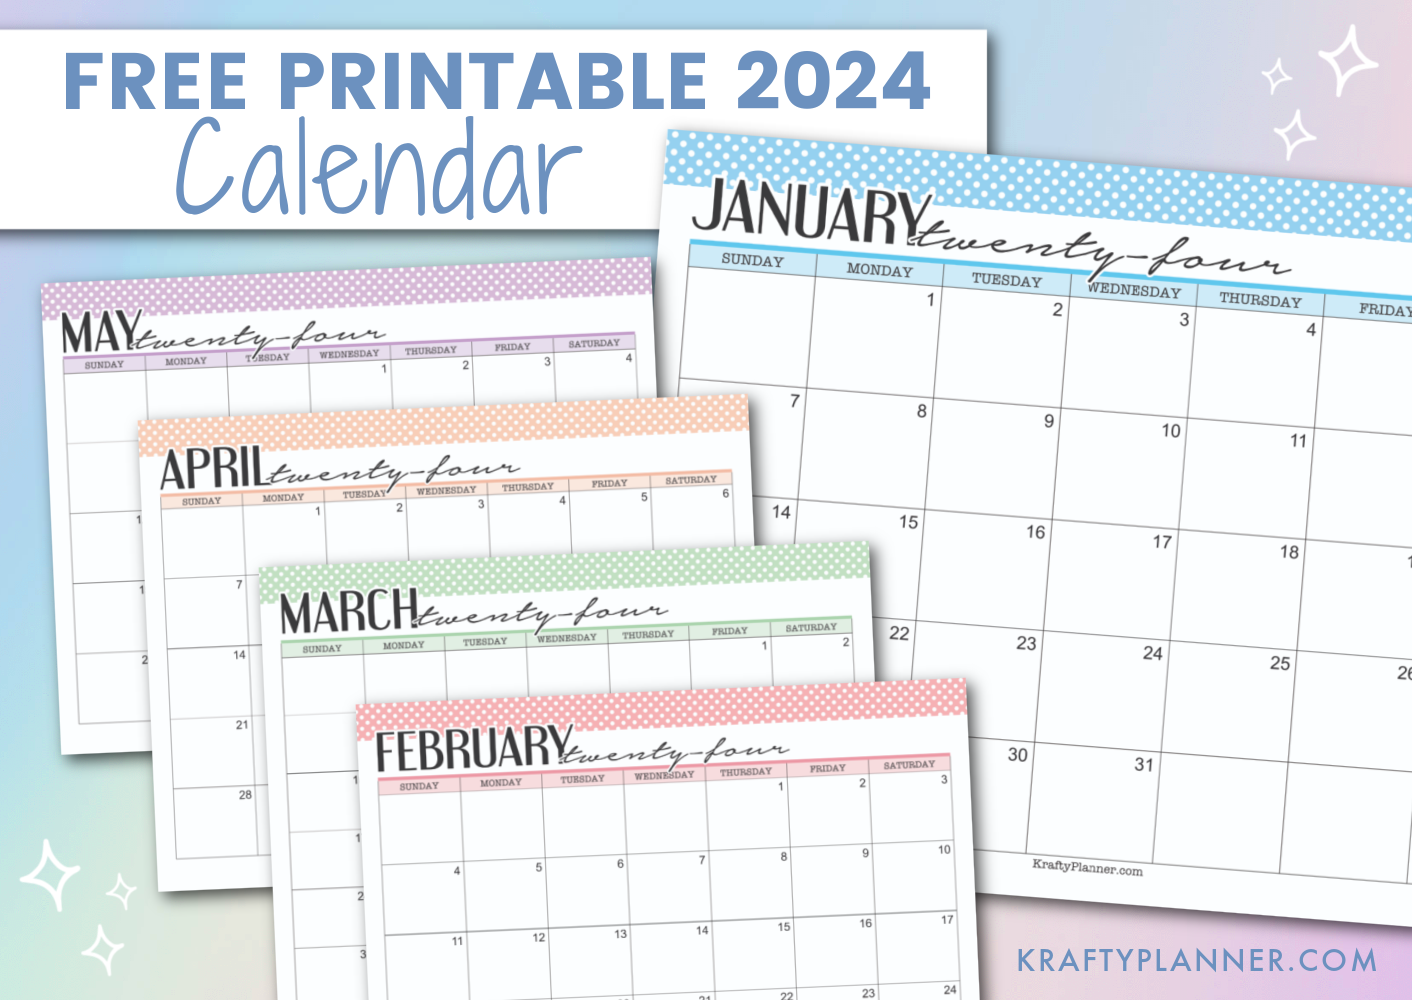 Free Printable 2024 Calendars (Color) — Krafty Planner for 2024 Coloring Calendar Printable